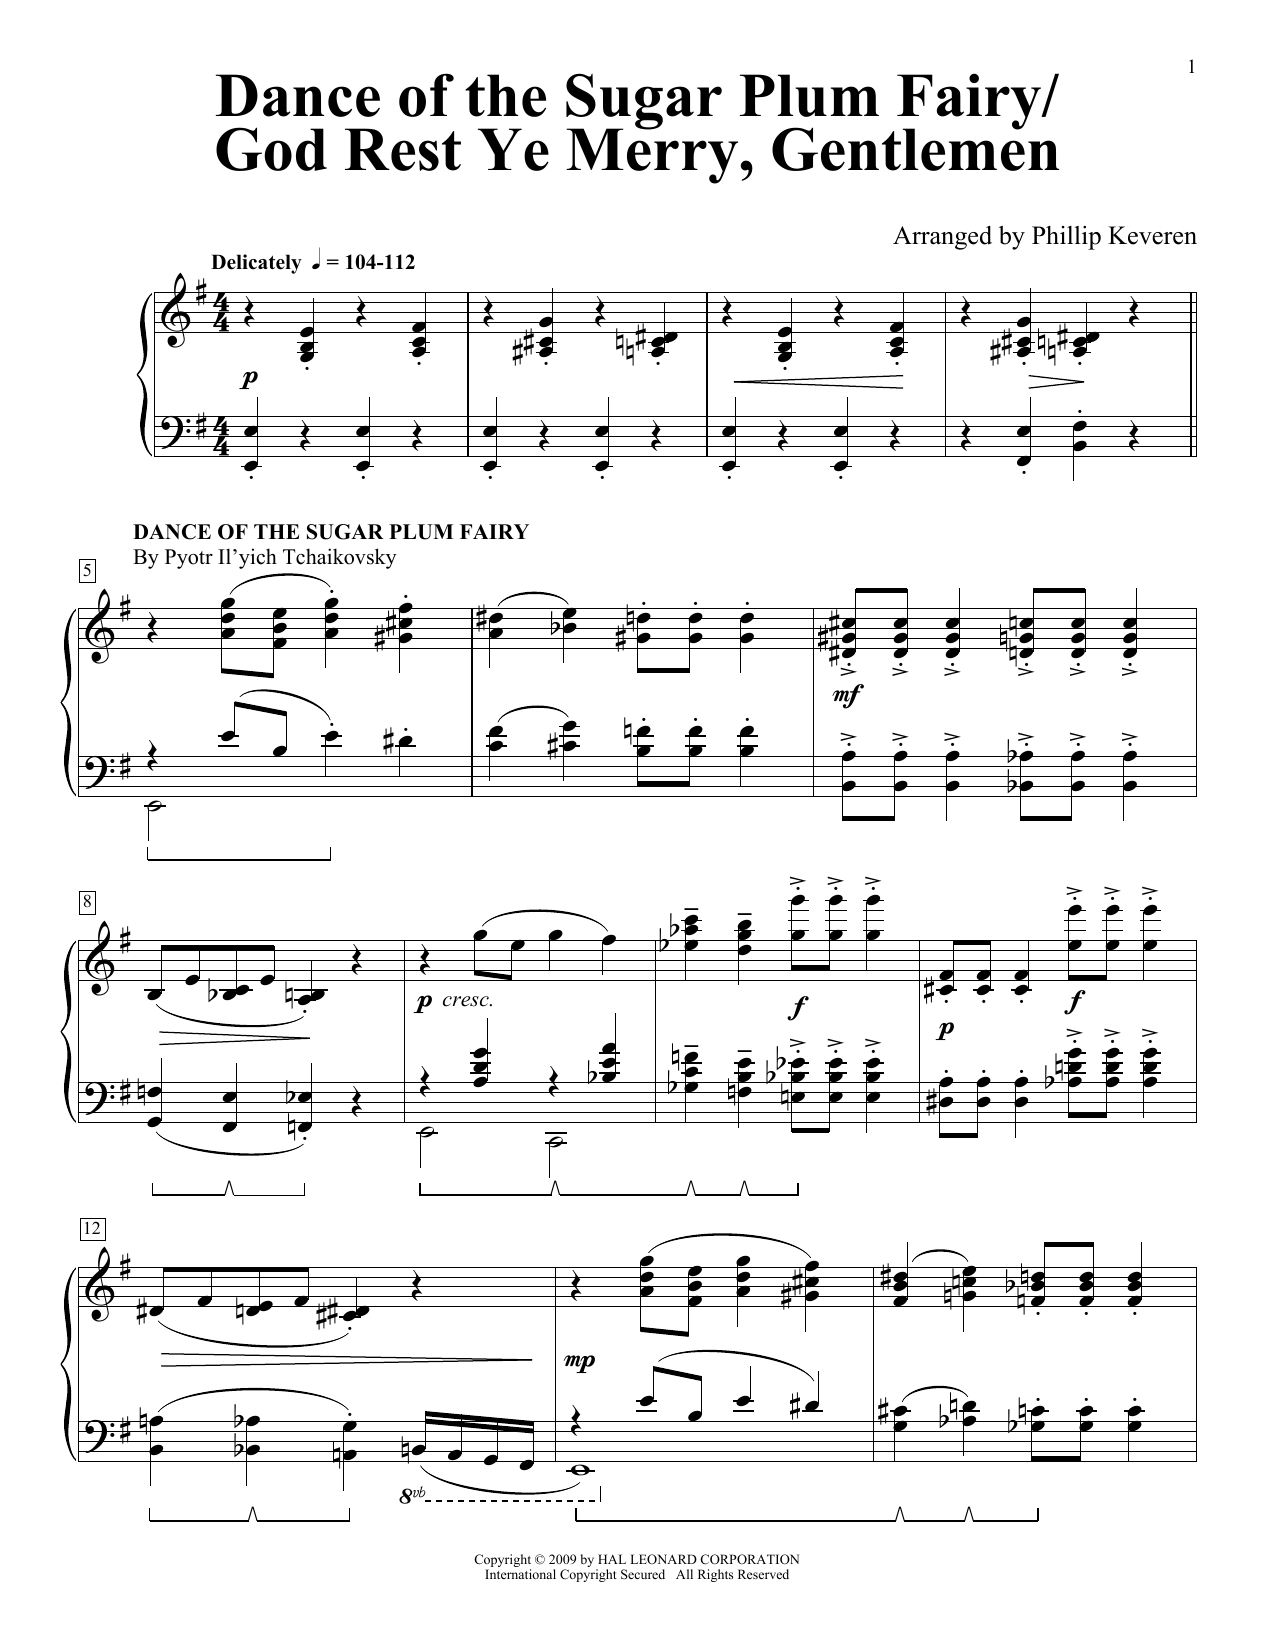 Traditional English Carol Dance Of The Sugar Plum Fairy/God Rest Ye Merry, Gentlemen (arr. Phillip Keveren) sheet music notes printable PDF score